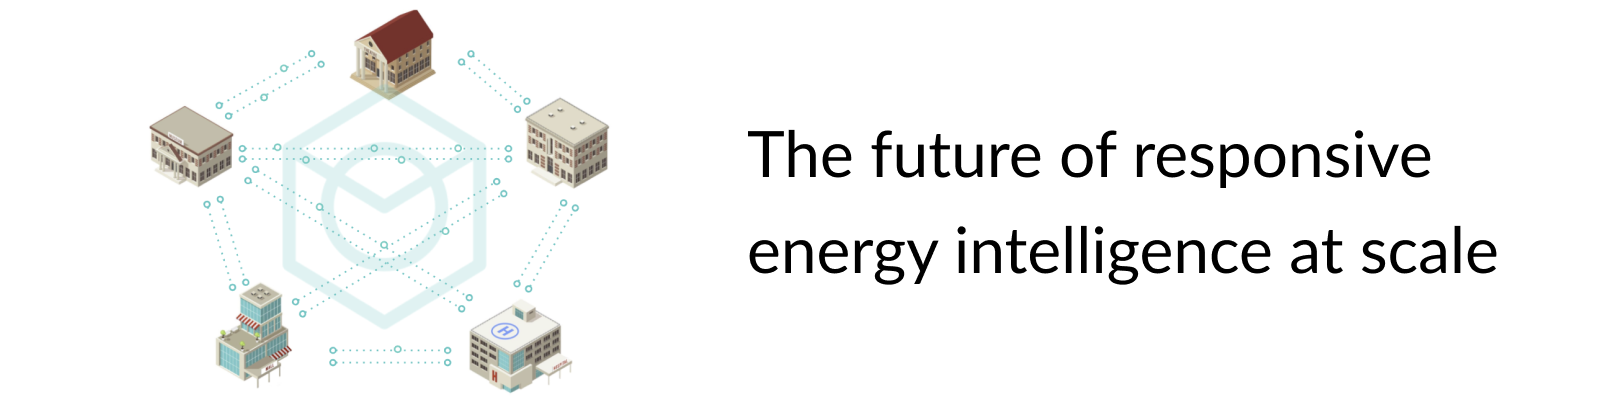 The Verdigris Energy Network: Responsive Energy Intelligence at Scale